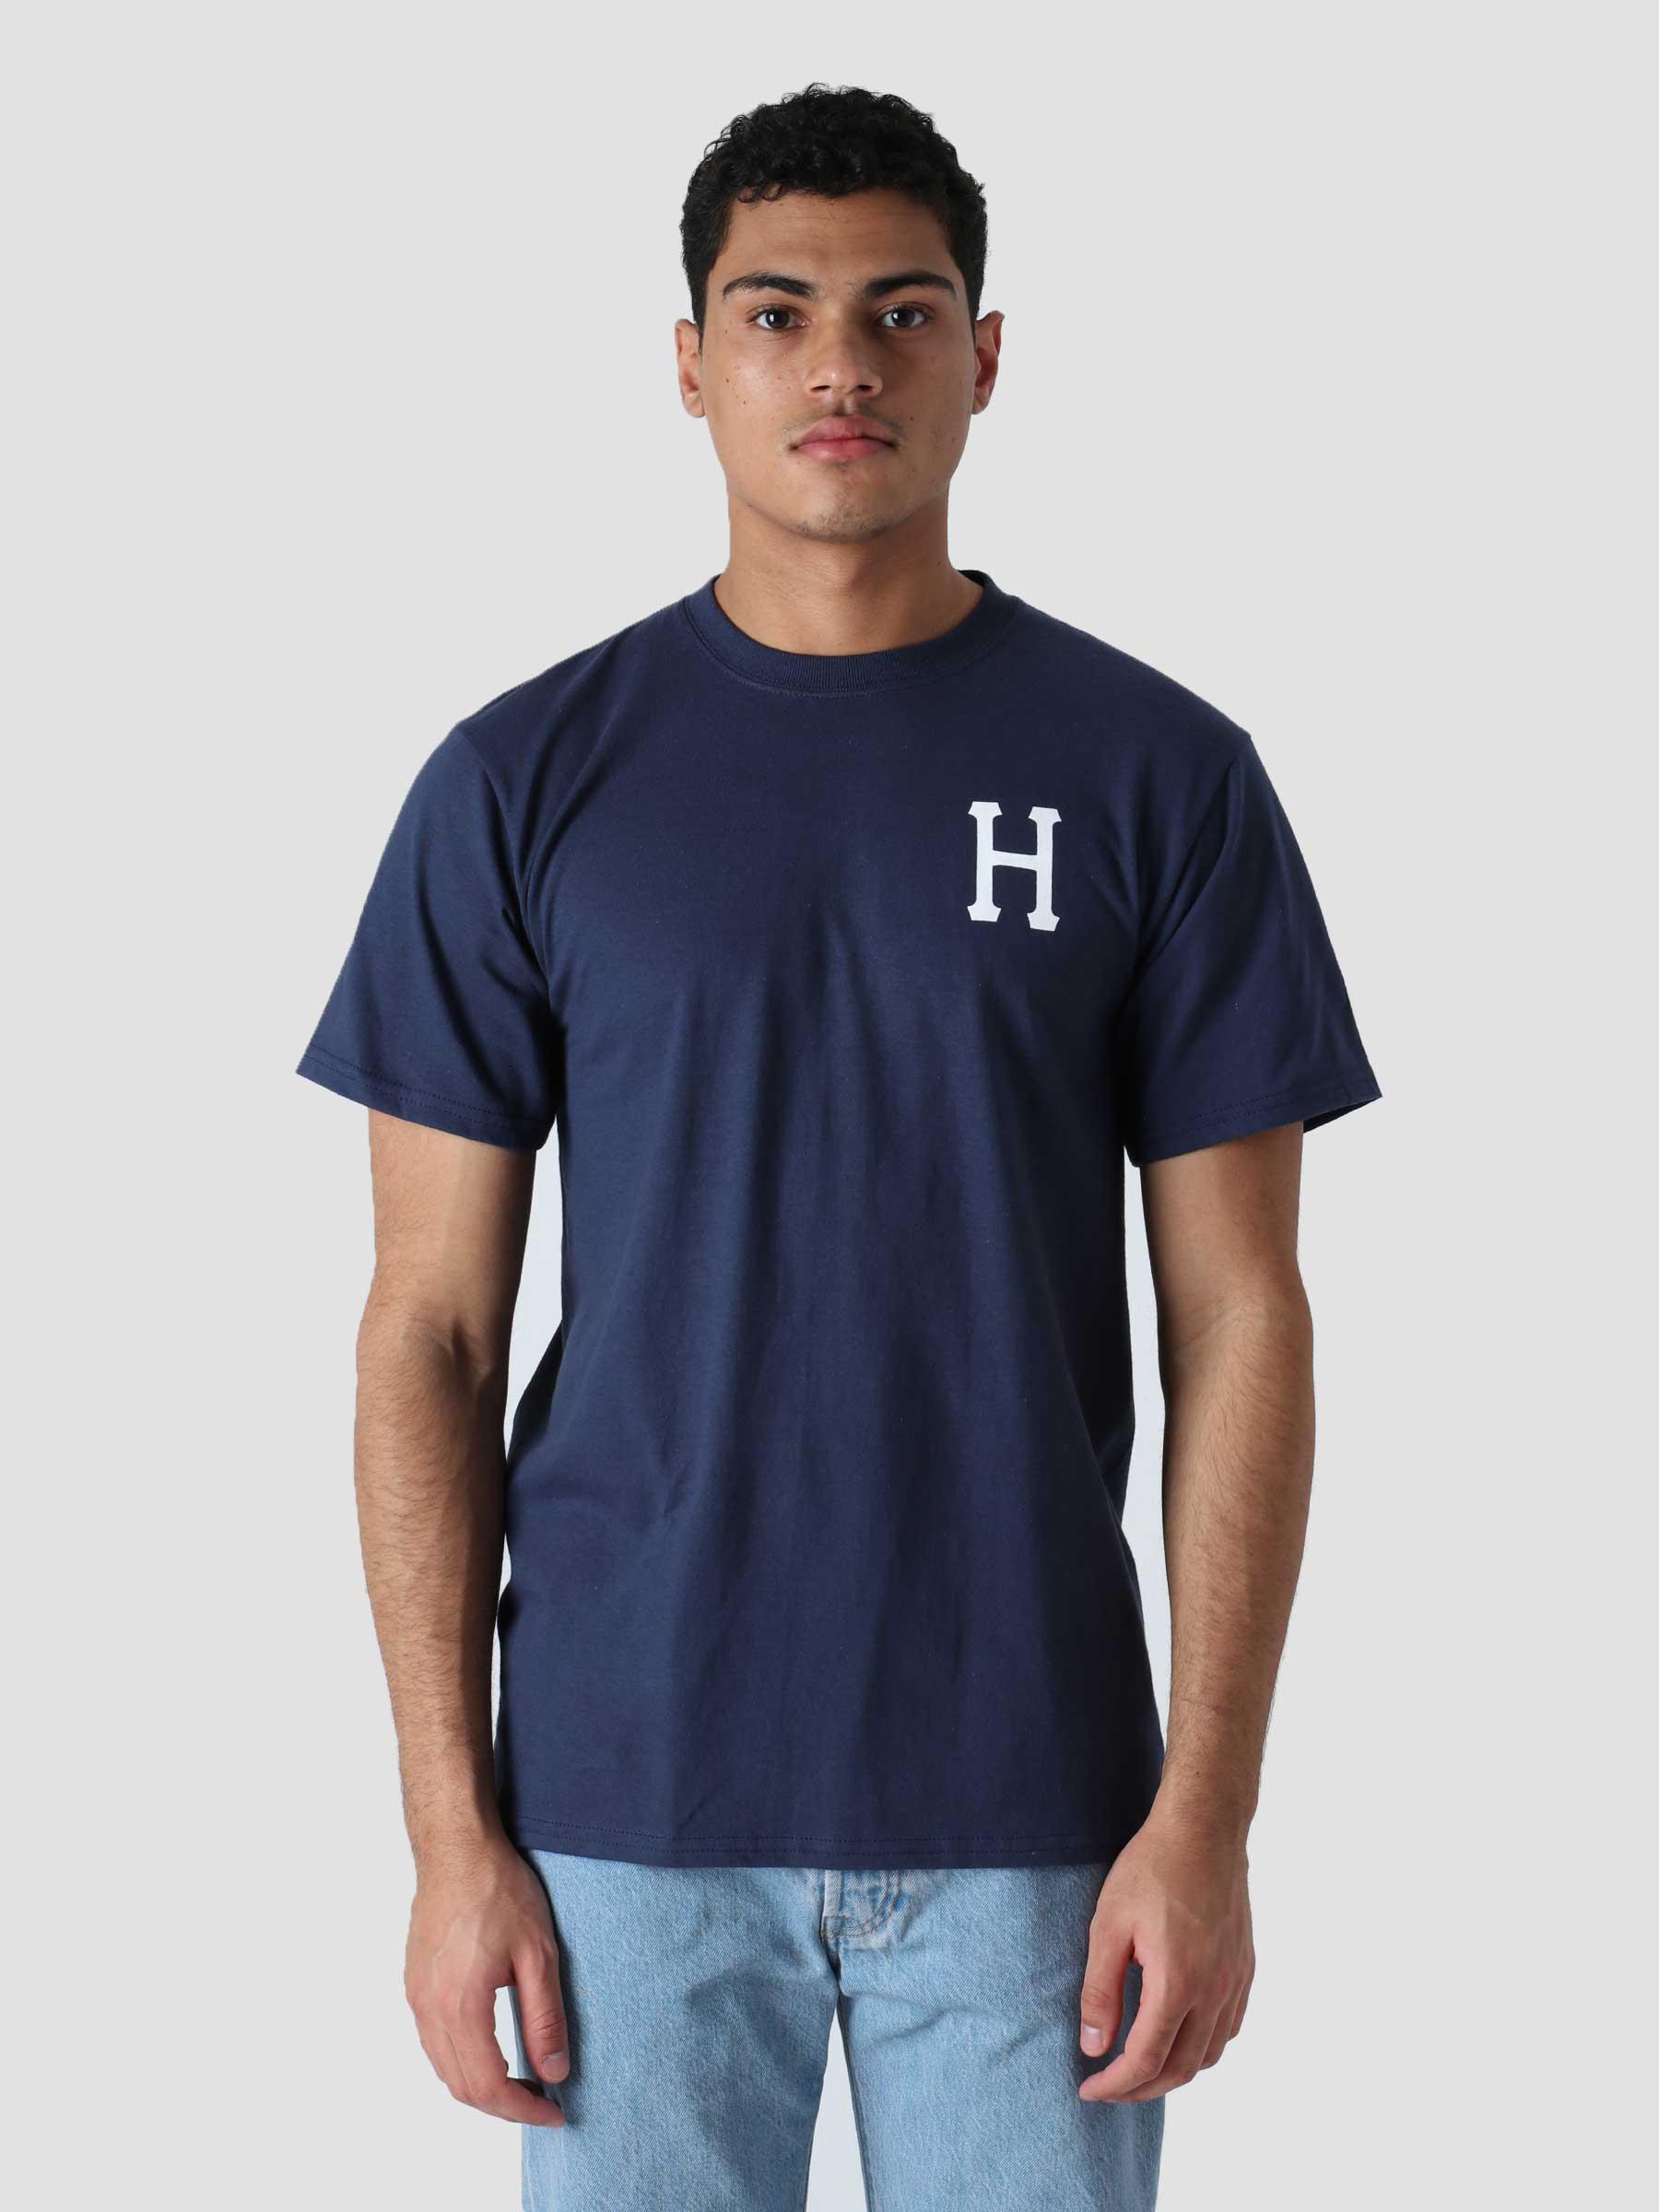 Essentials Classic H S/S T-Shirt Navy TS01048